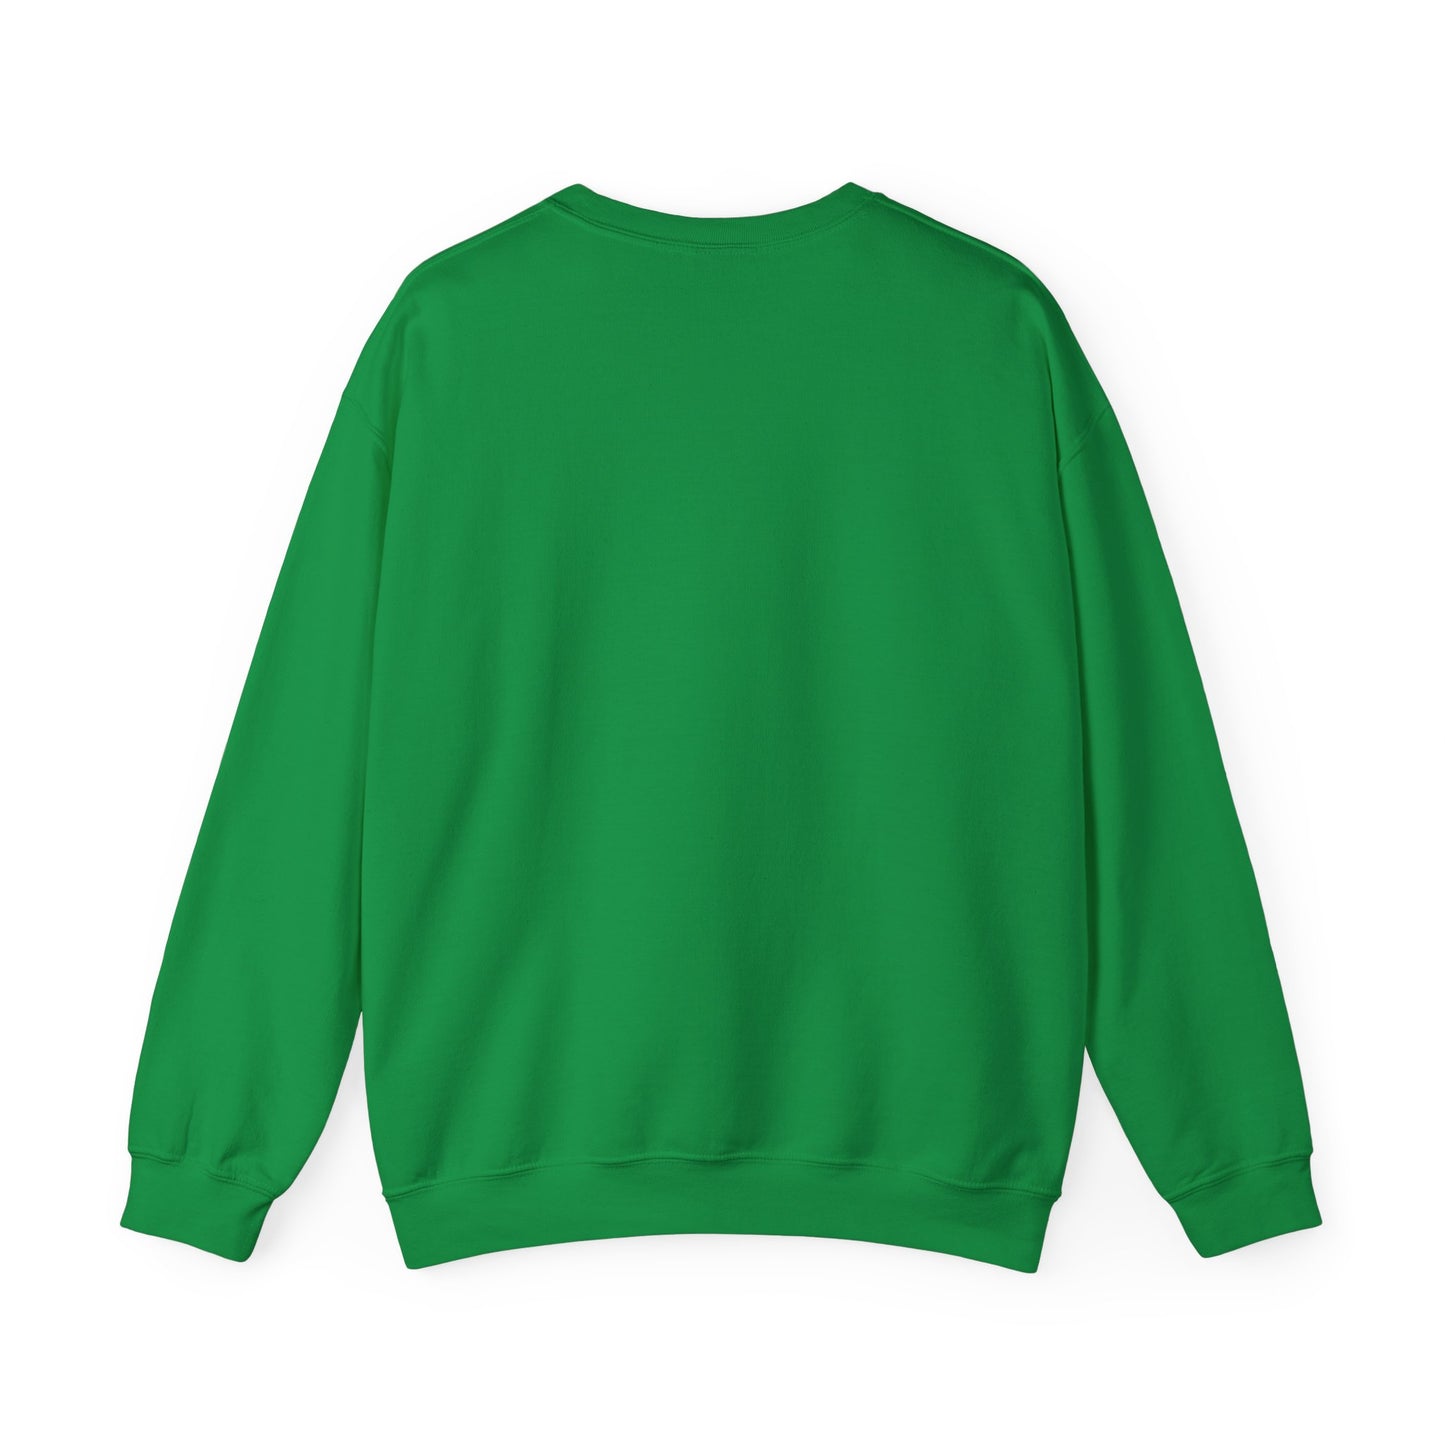 There's the Y Unisex Heavy Blend™ Crewneck Sweatshirt